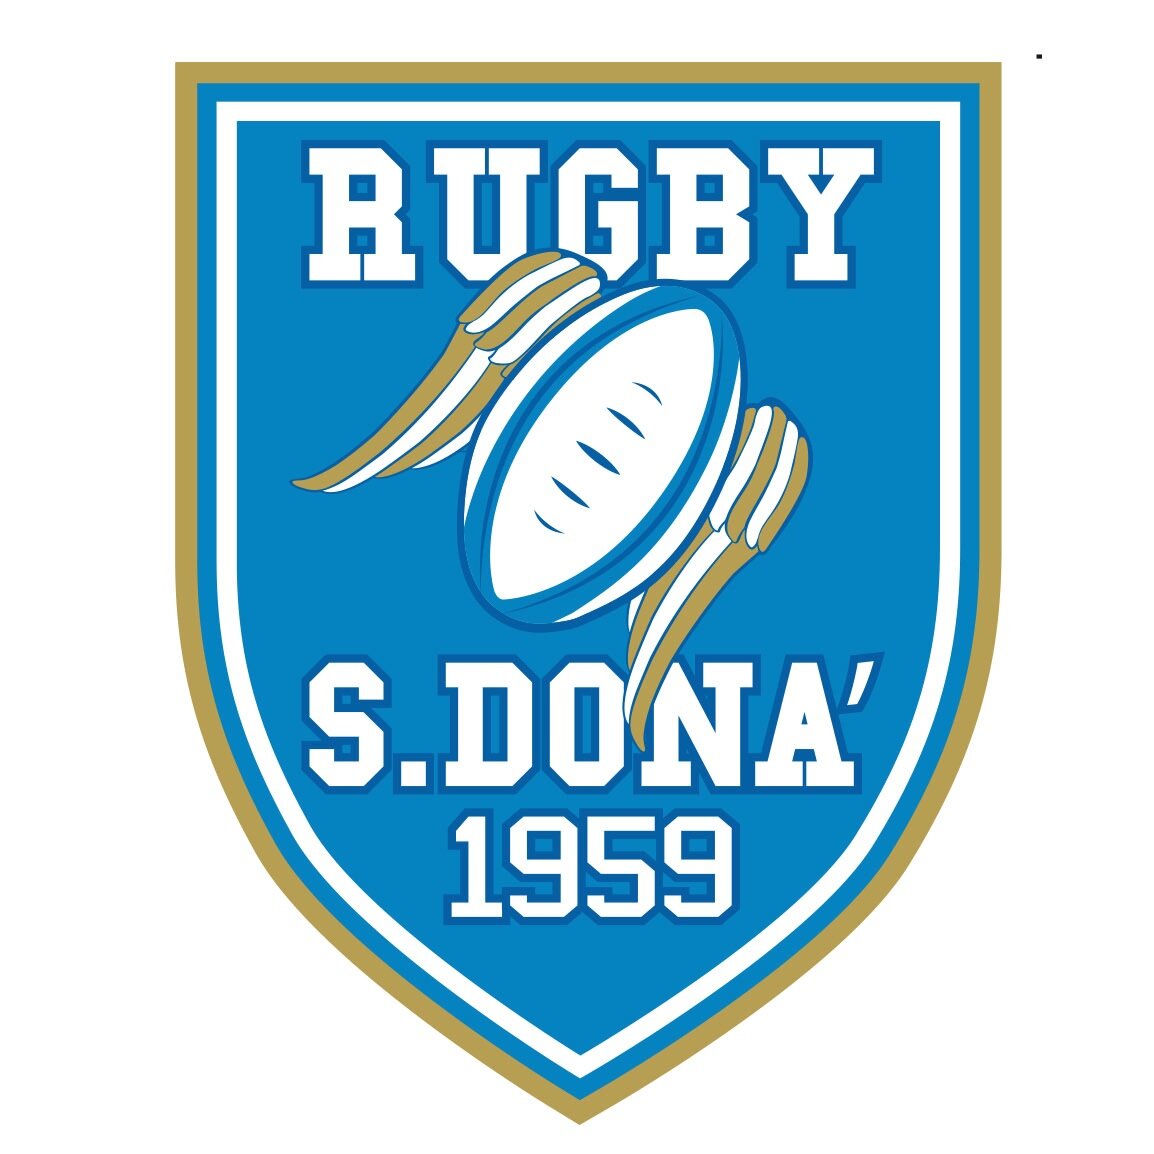 Dal 1959 il rugby a San Donà di Piave (VE), Italy
#rugbysandona #cuorebiancoceleste